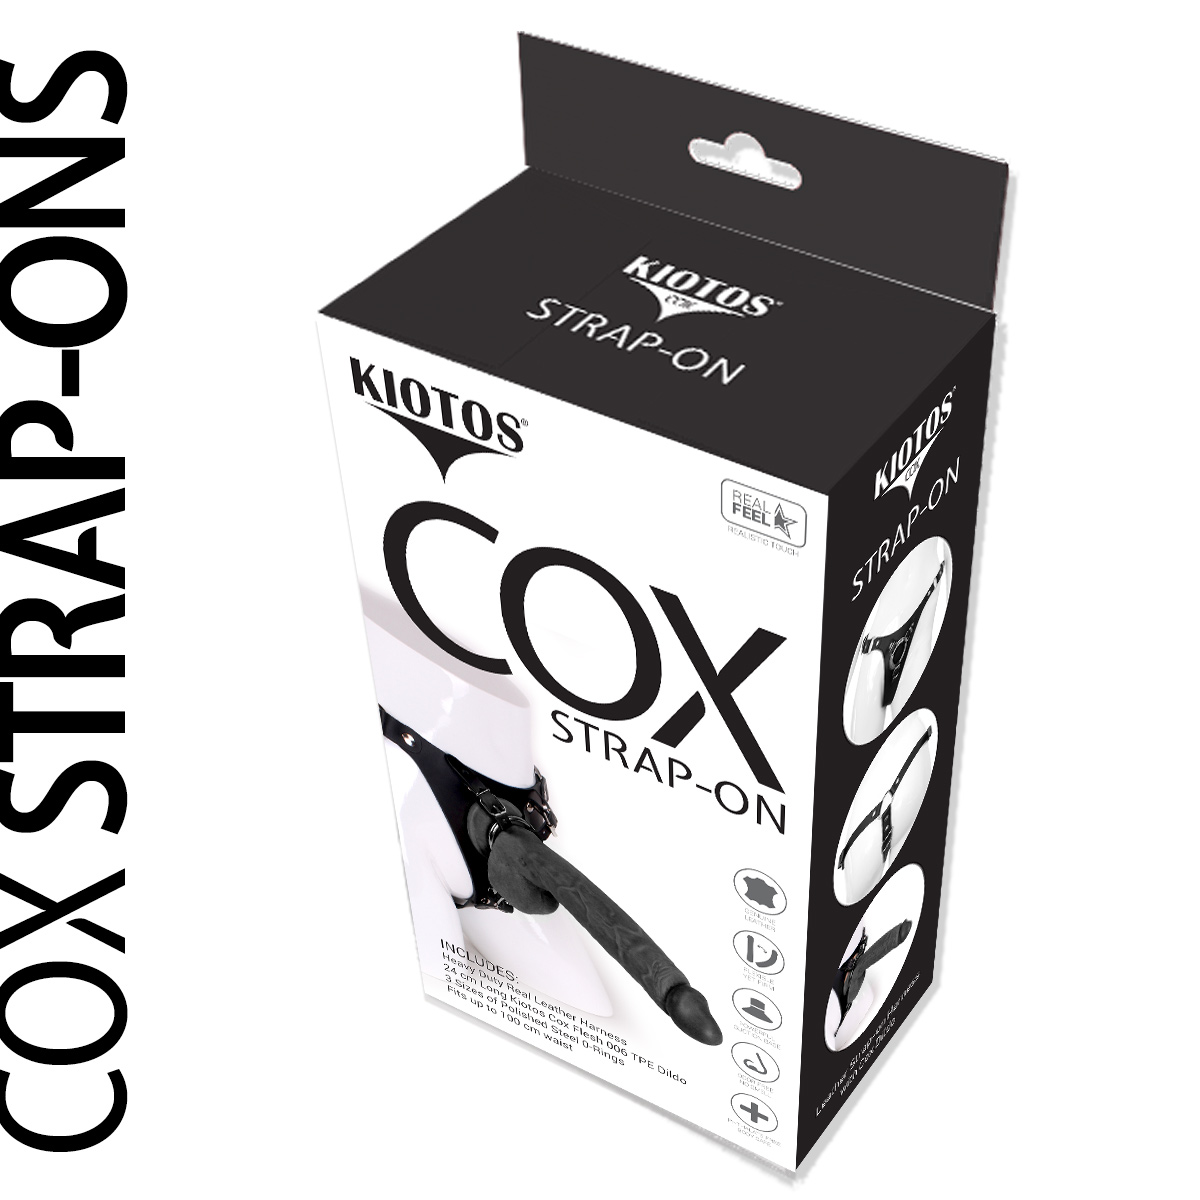 Kiotos-COX-Strap-On-Dildo-Black-006-OPR-307903-4